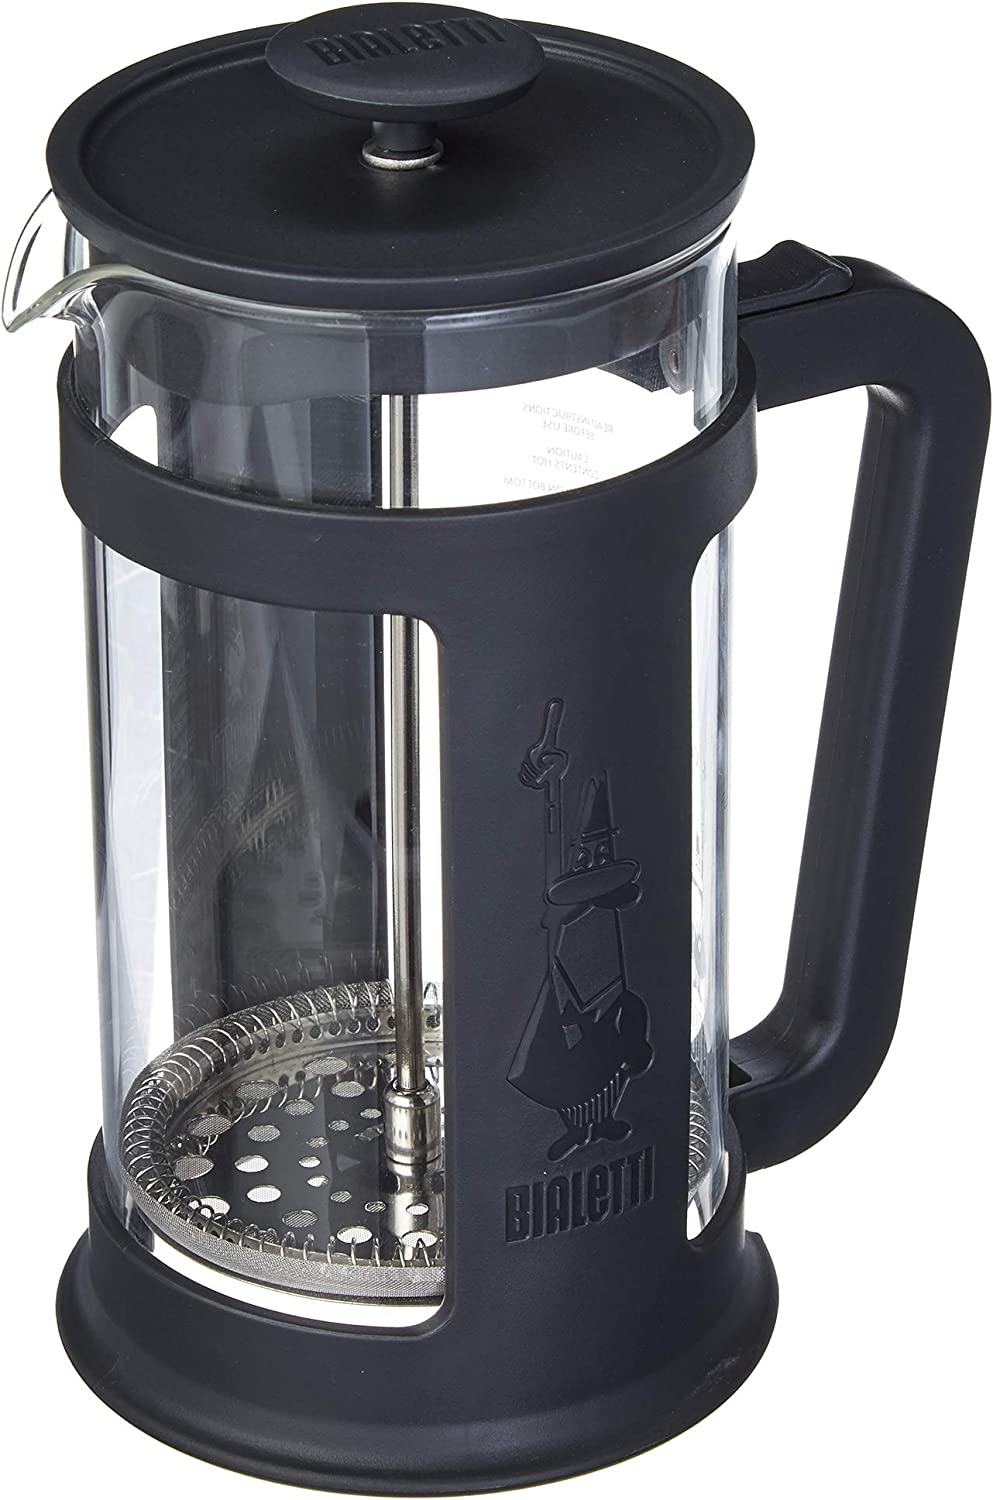 Bialetti Modern coffee press, glass, black, 8-cup